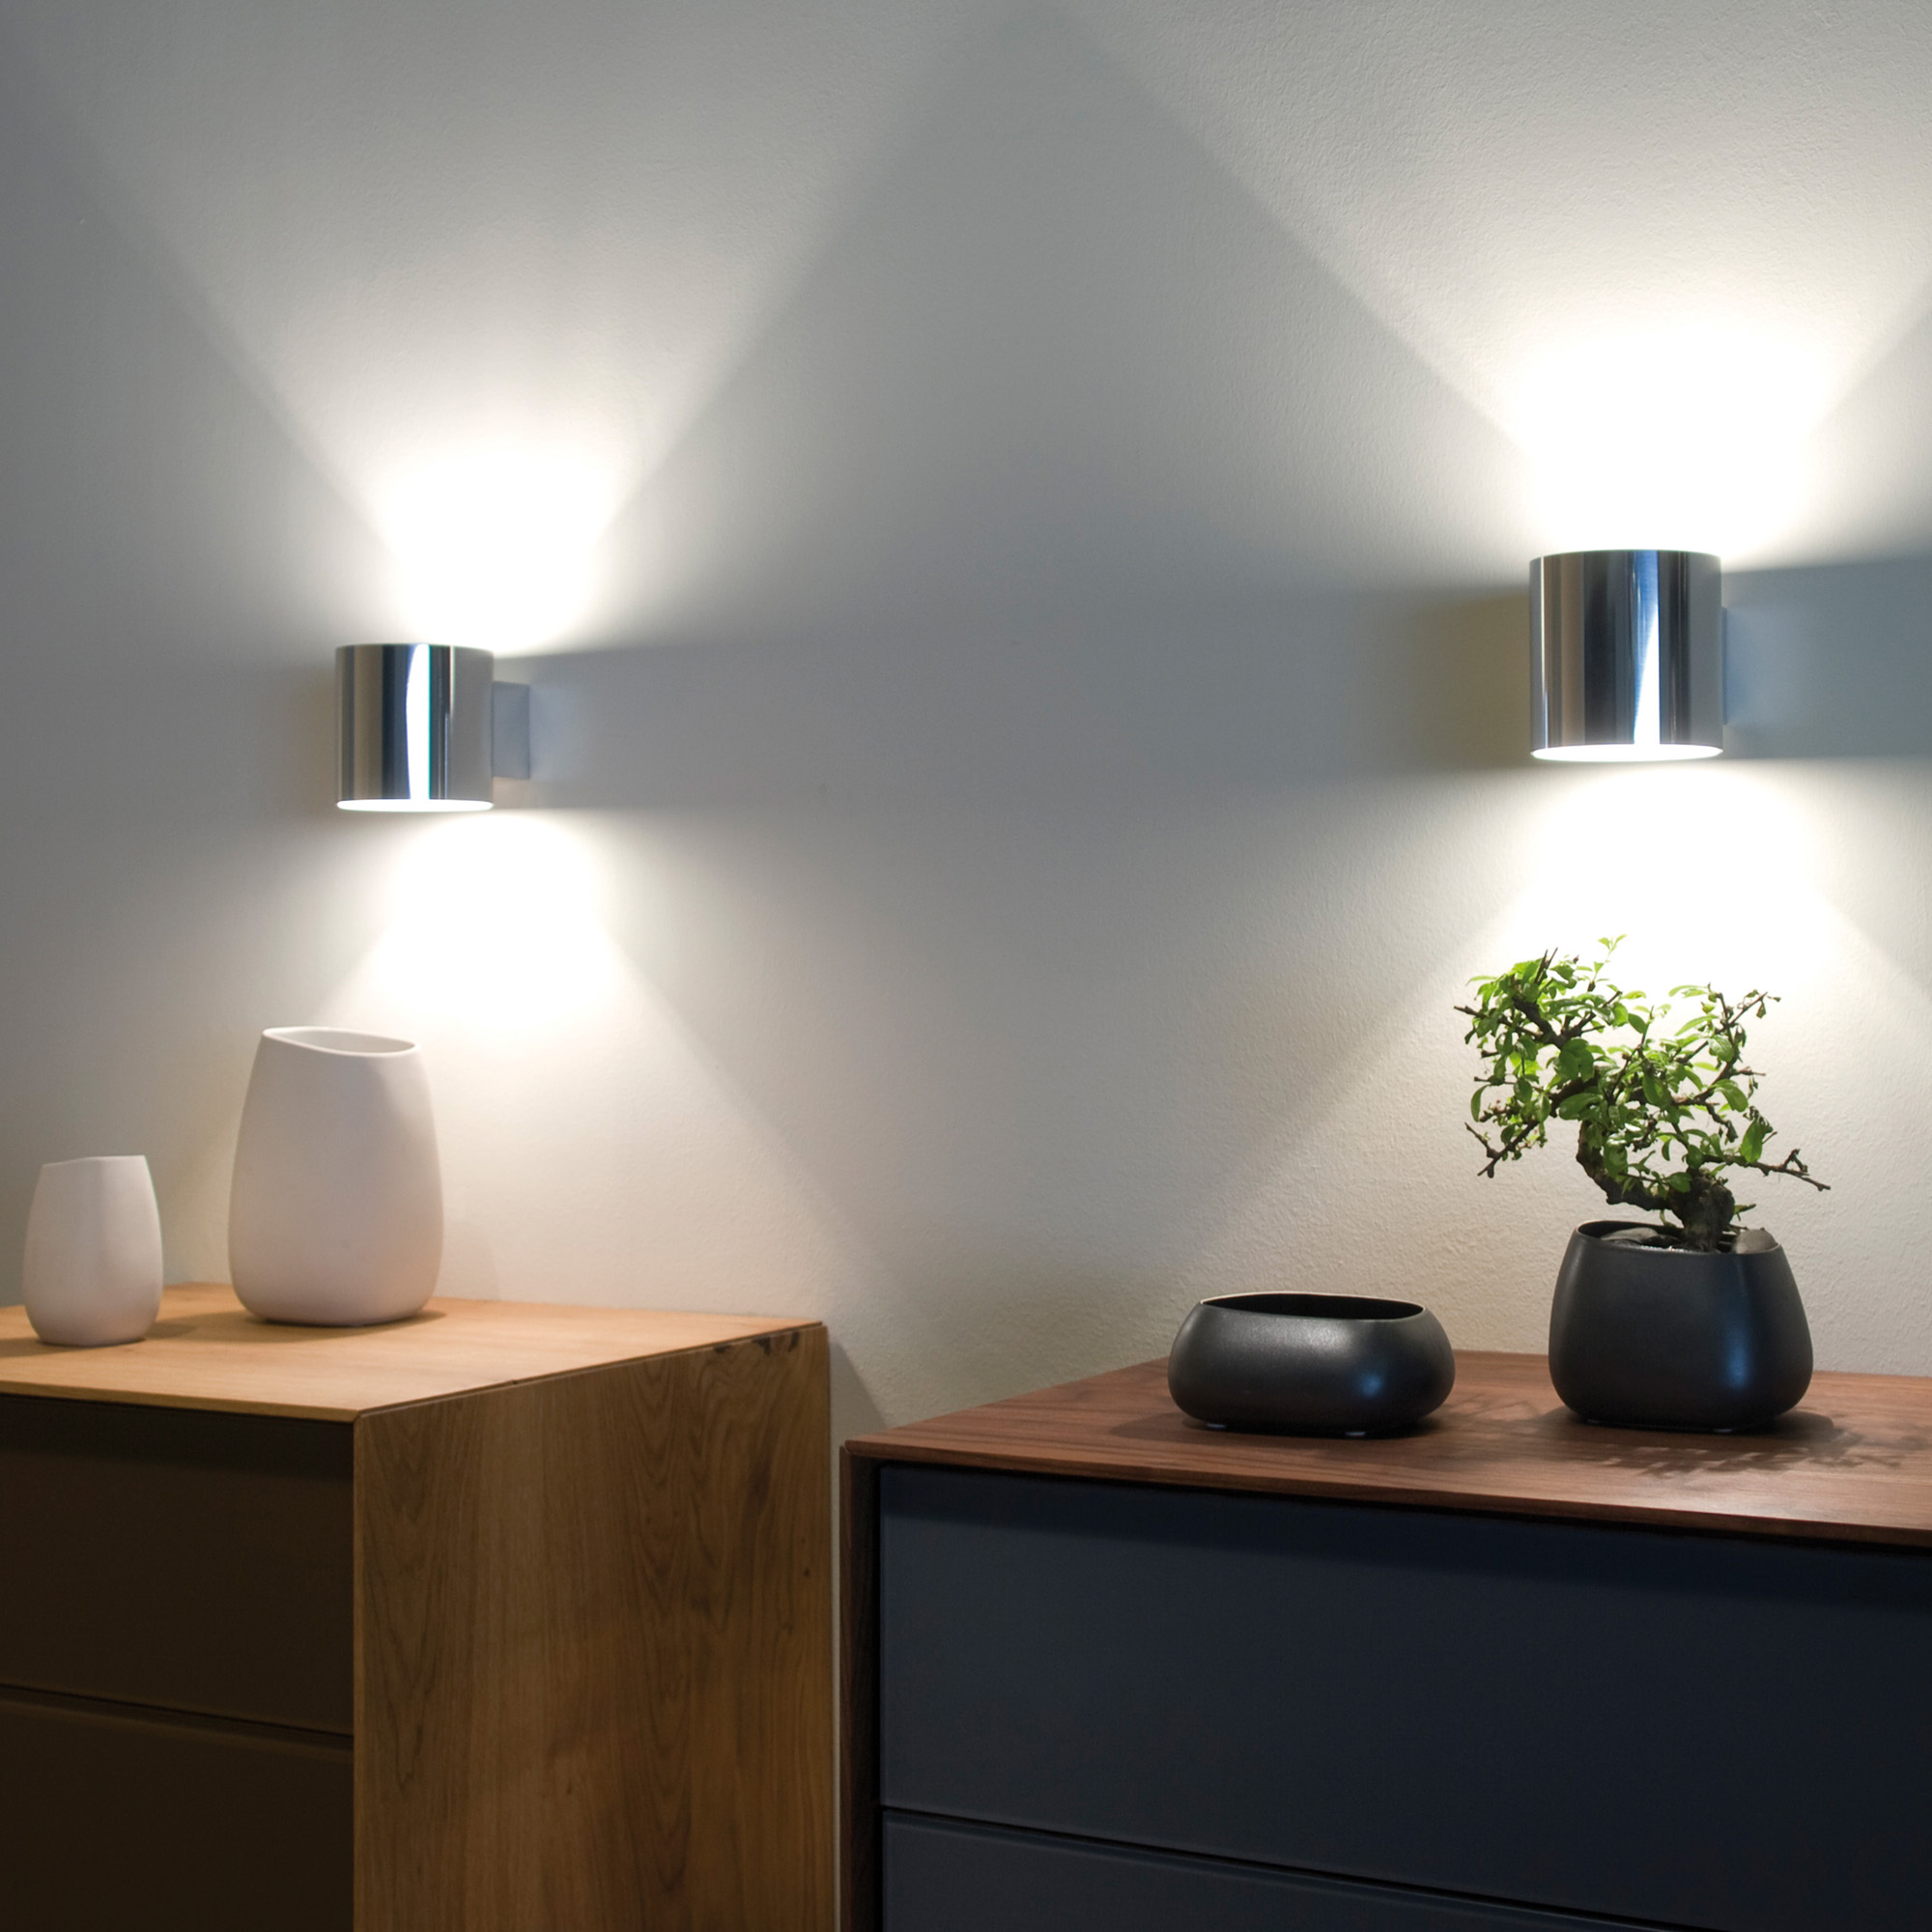 OLIGO PROJECT Wall Lamp chrome-matt white